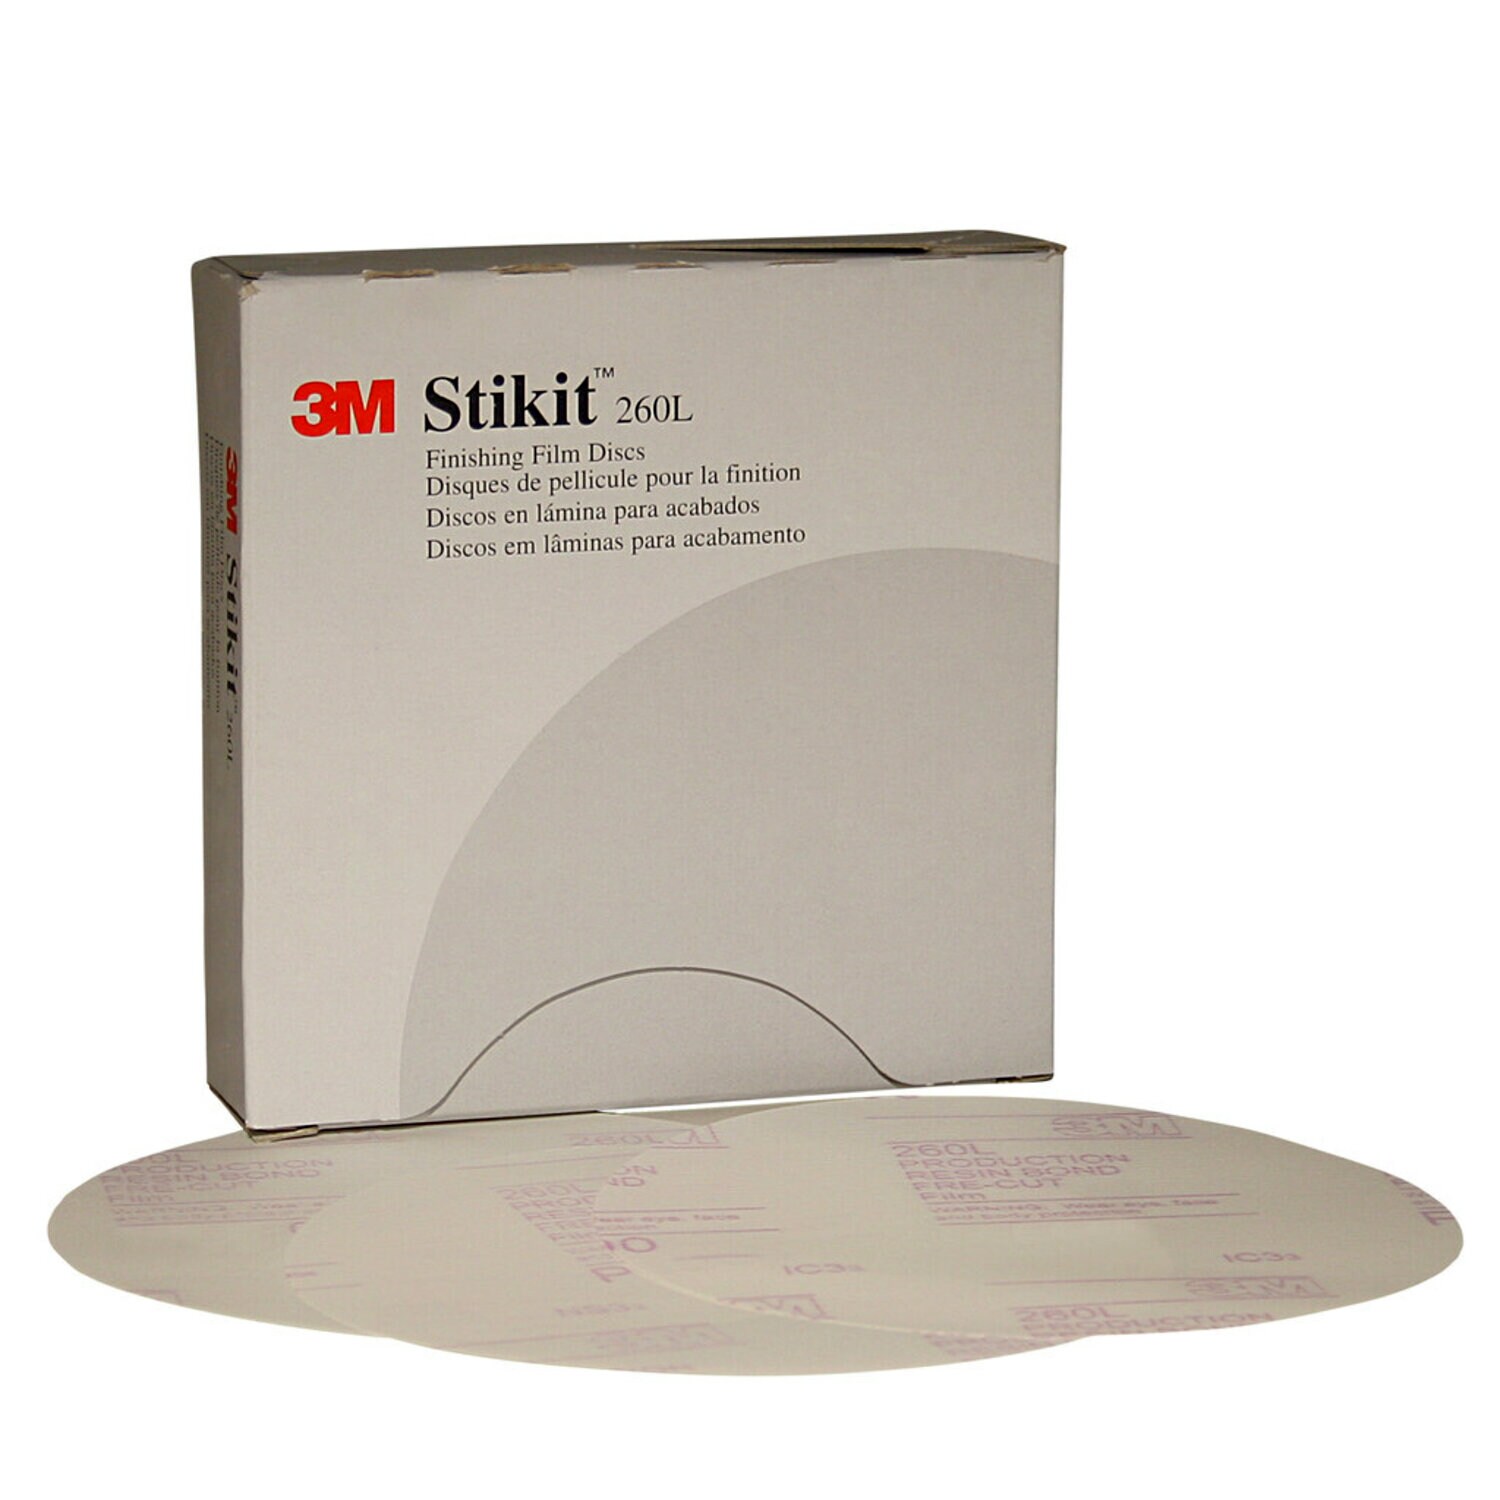 7000118150 - 3M Stikit Finishing Film Abrasive Disc 260L, 01320, 6 in, P800, 100
discs per carton, 4 cartons per case